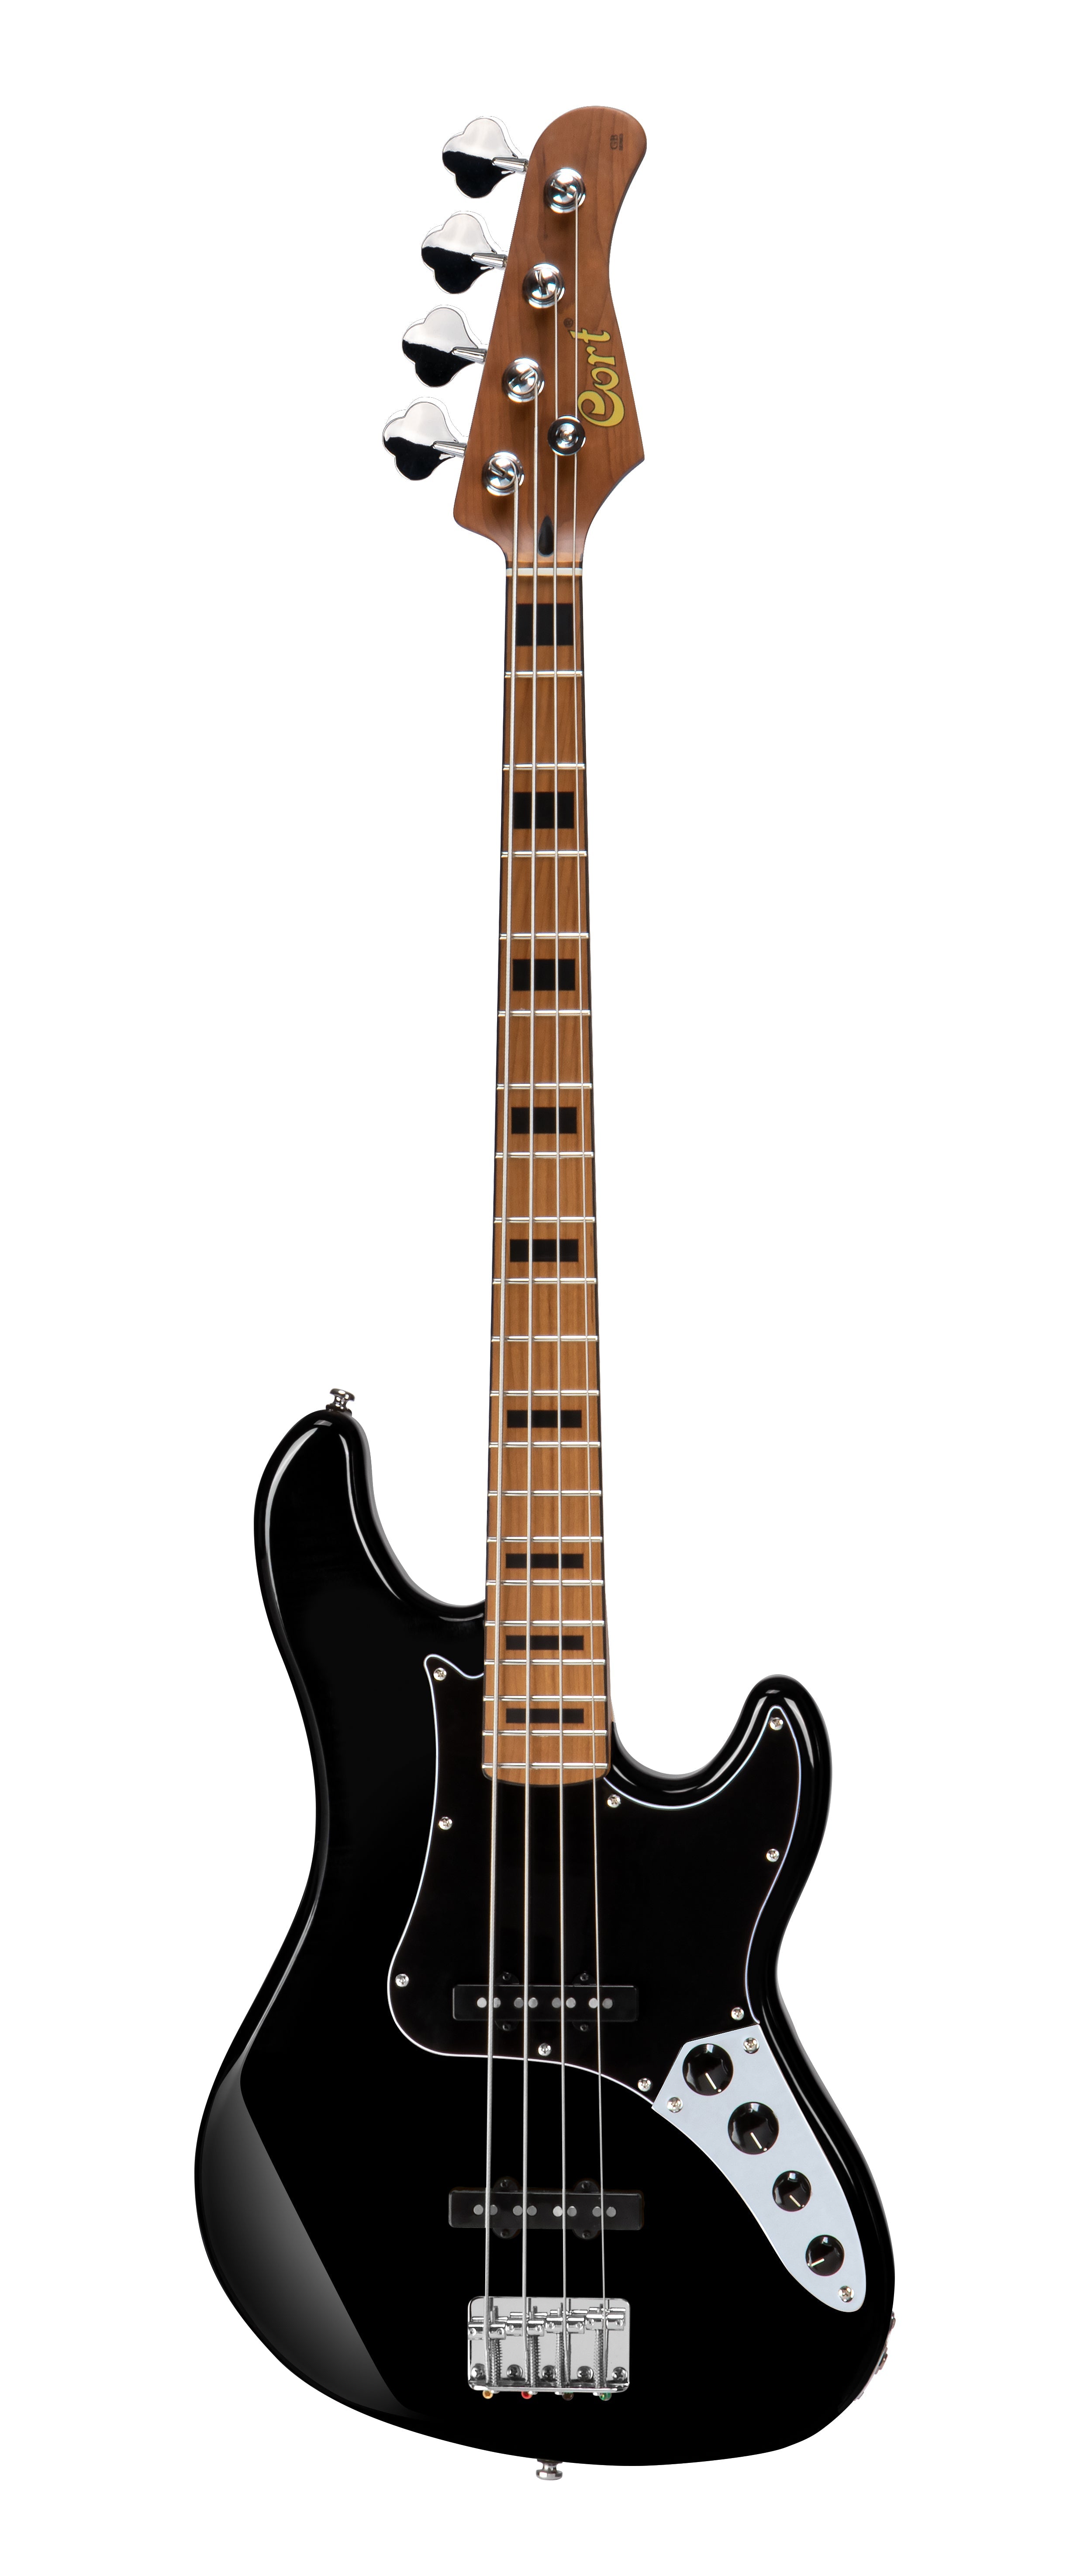 Cort GB64JJ-BK, Bass Guitar for sale at Richards Guitars.